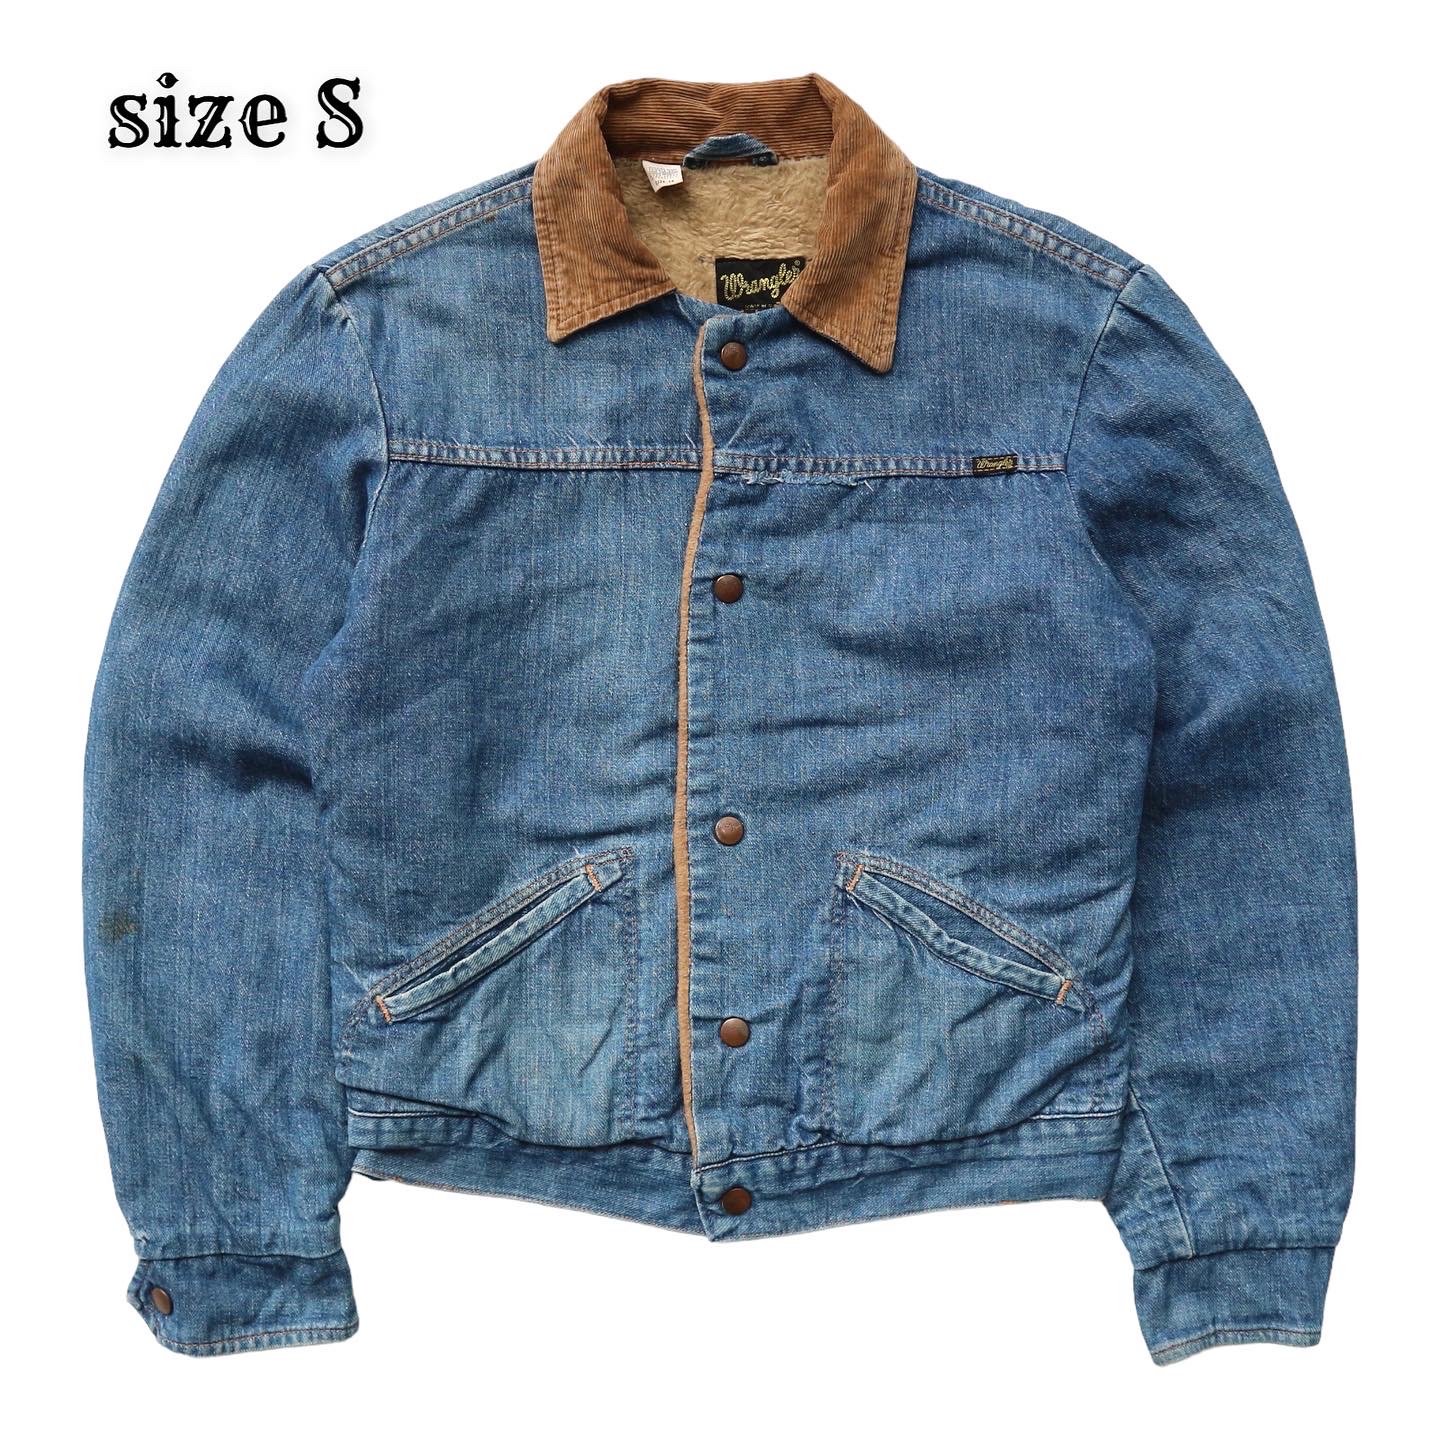 Vintage 70s Wrangler Denim Jacket Size S denimister